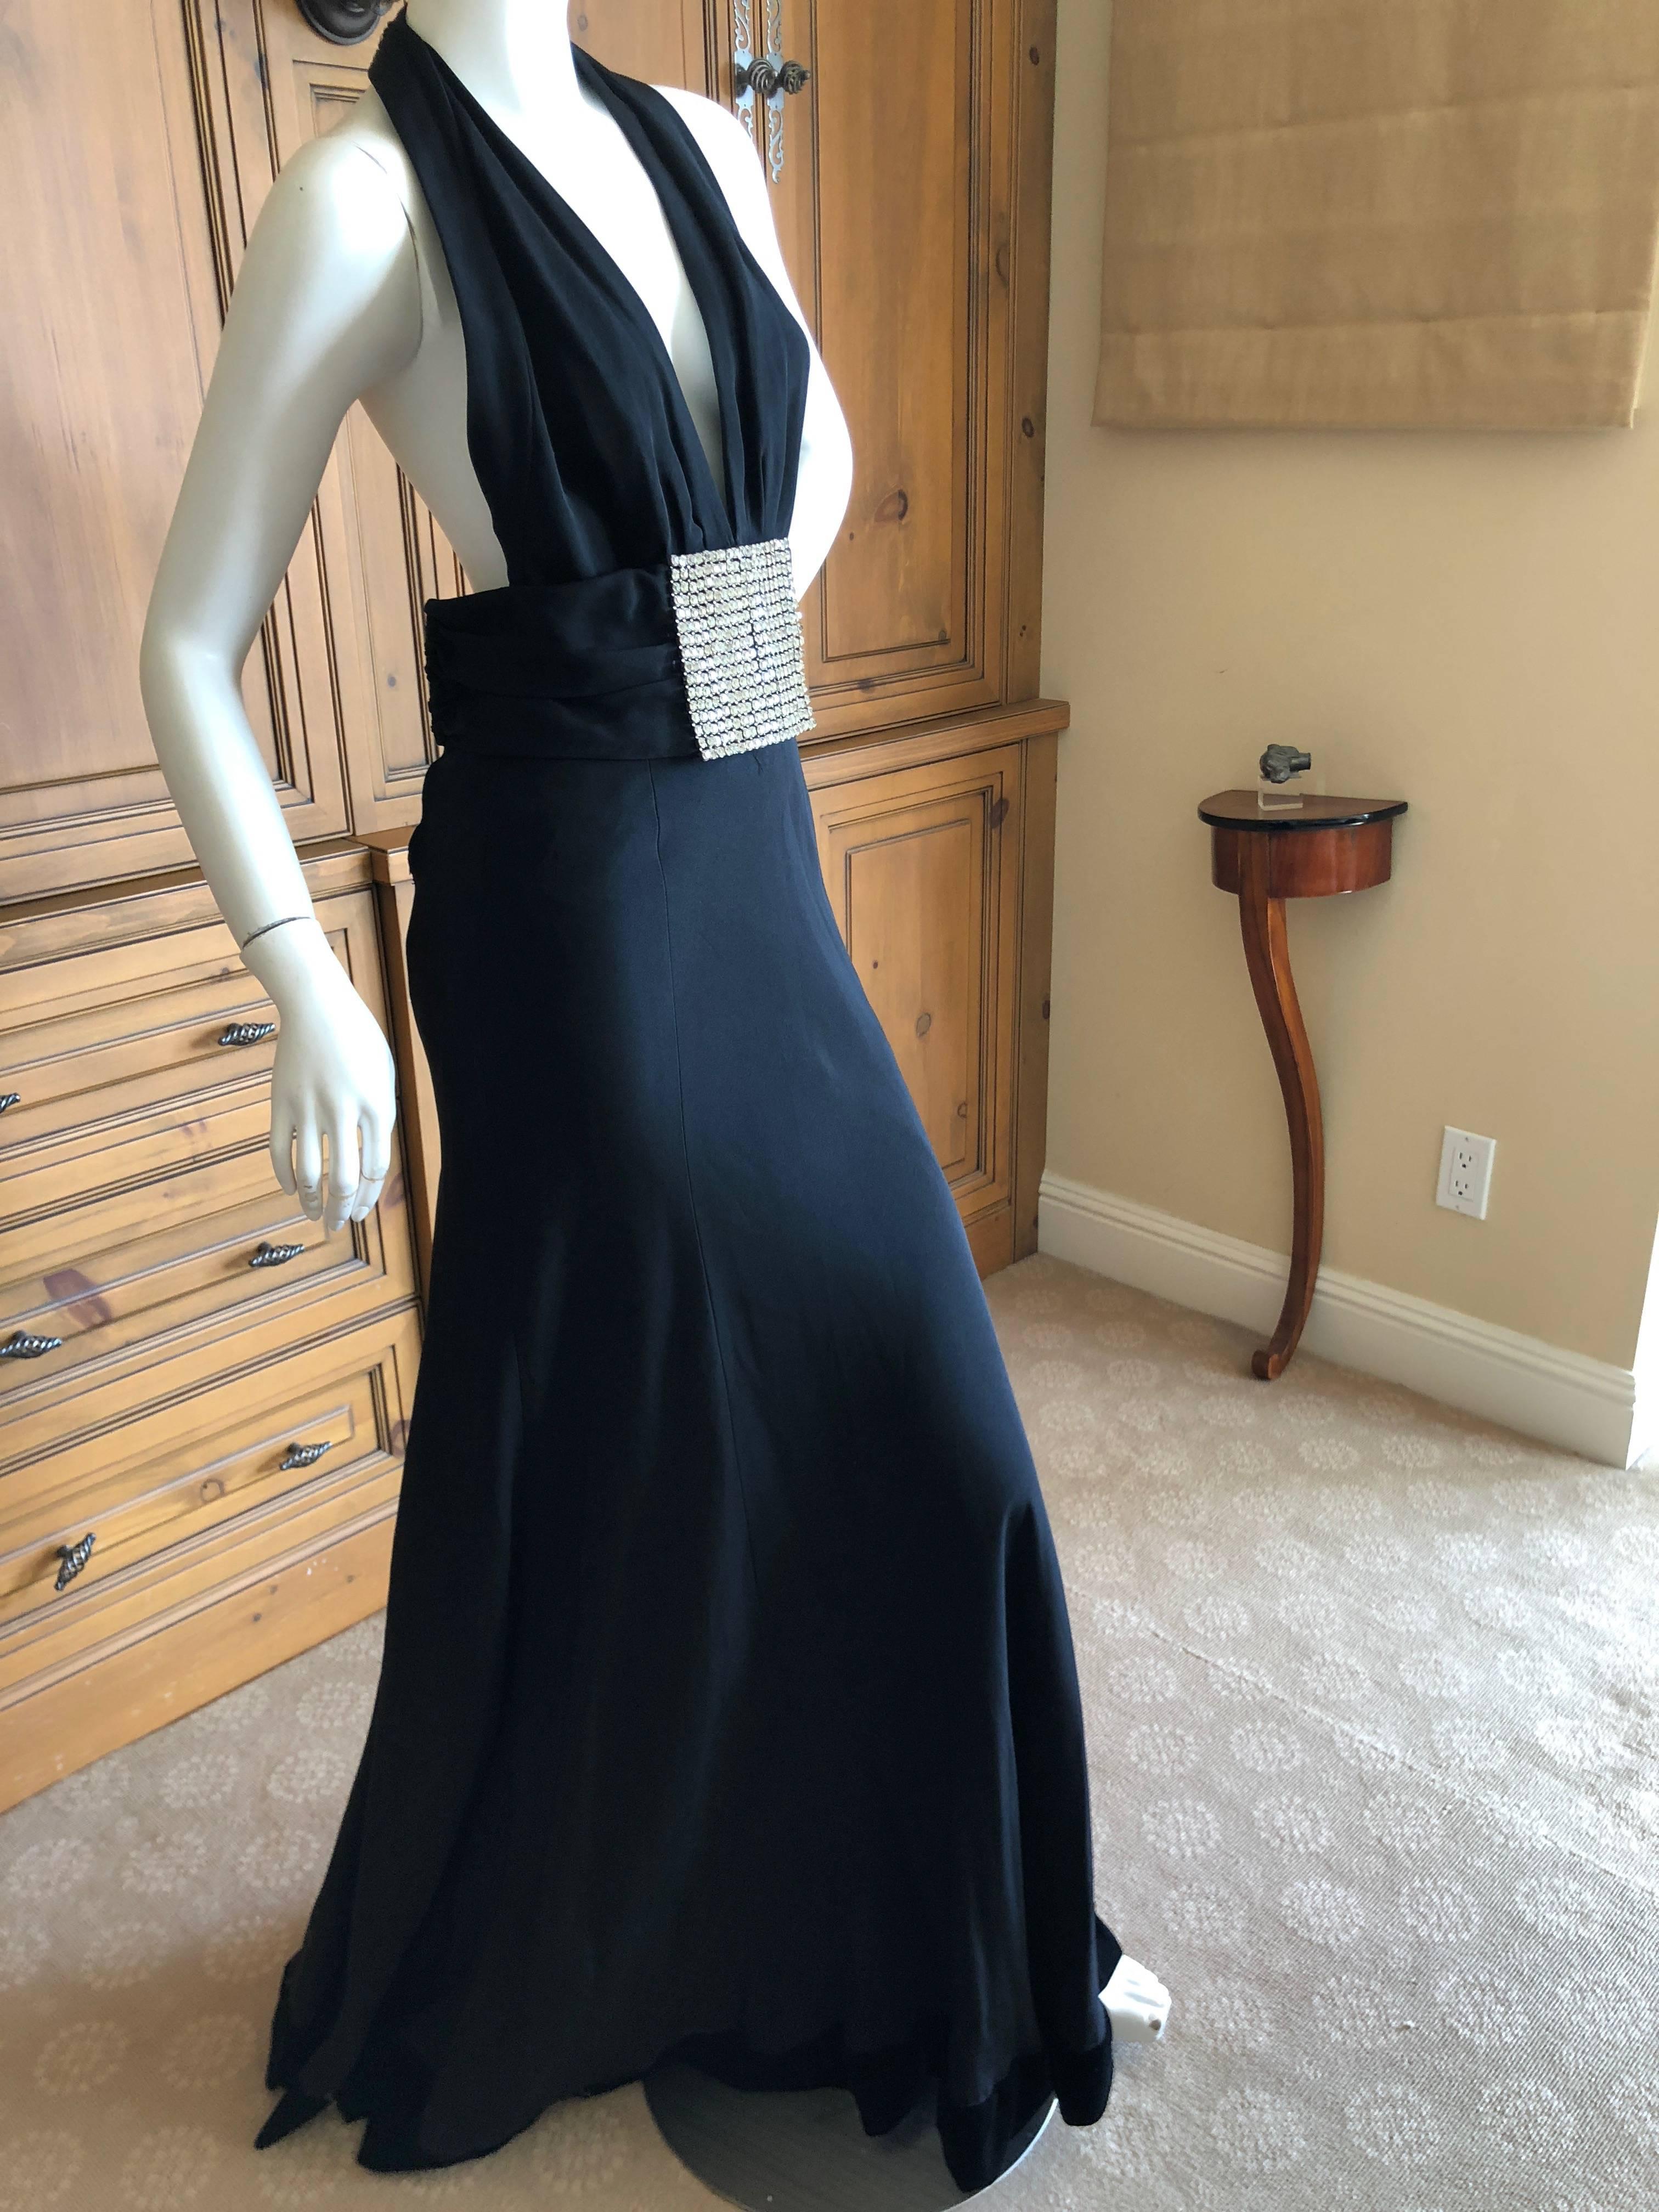 Cardinali Black Low Cut Halter Evening Dress with Huge Rhinestone Crystal Belt For Sale 4